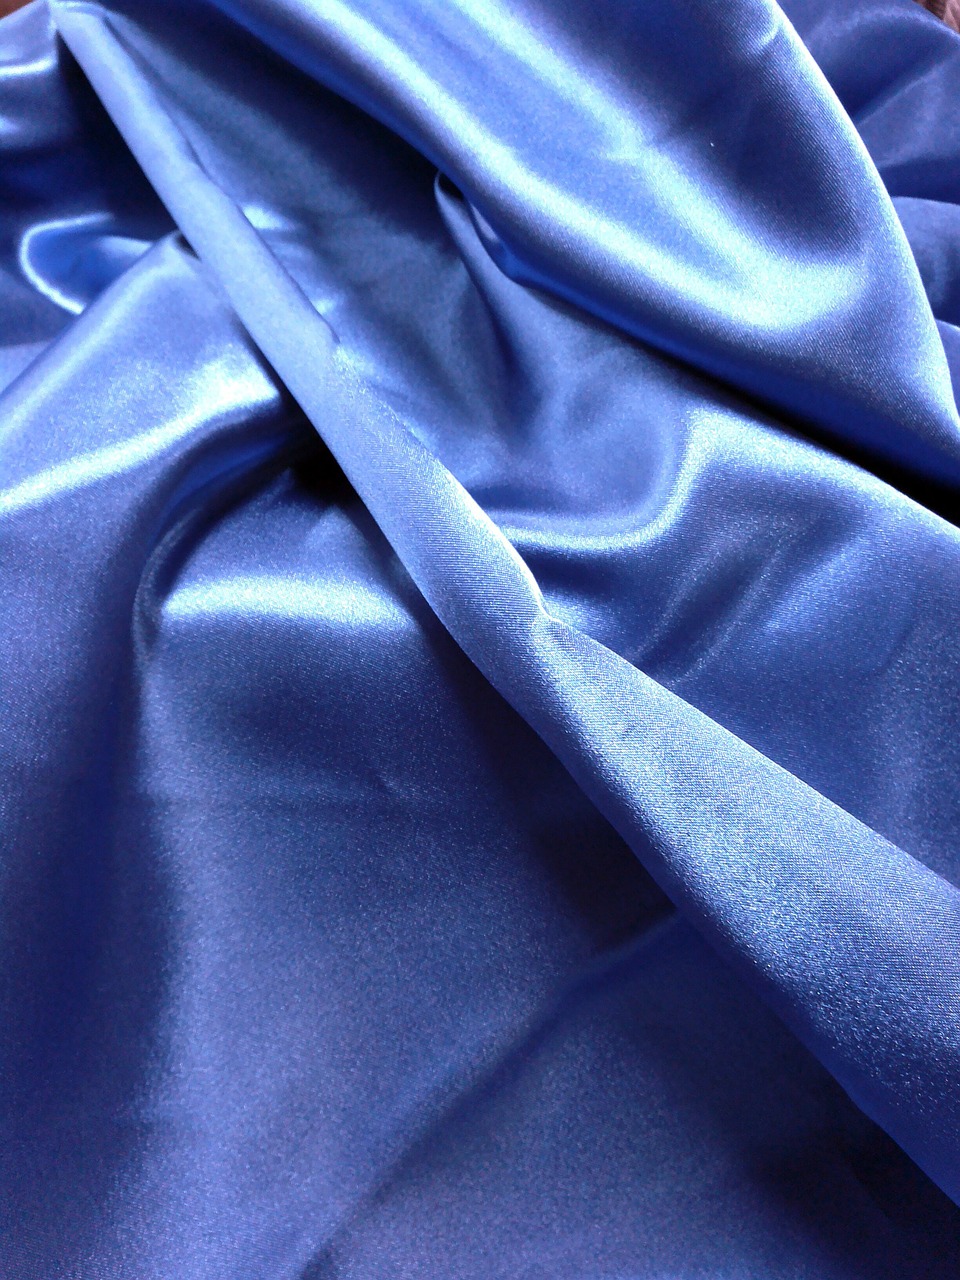 silk textile material free photo